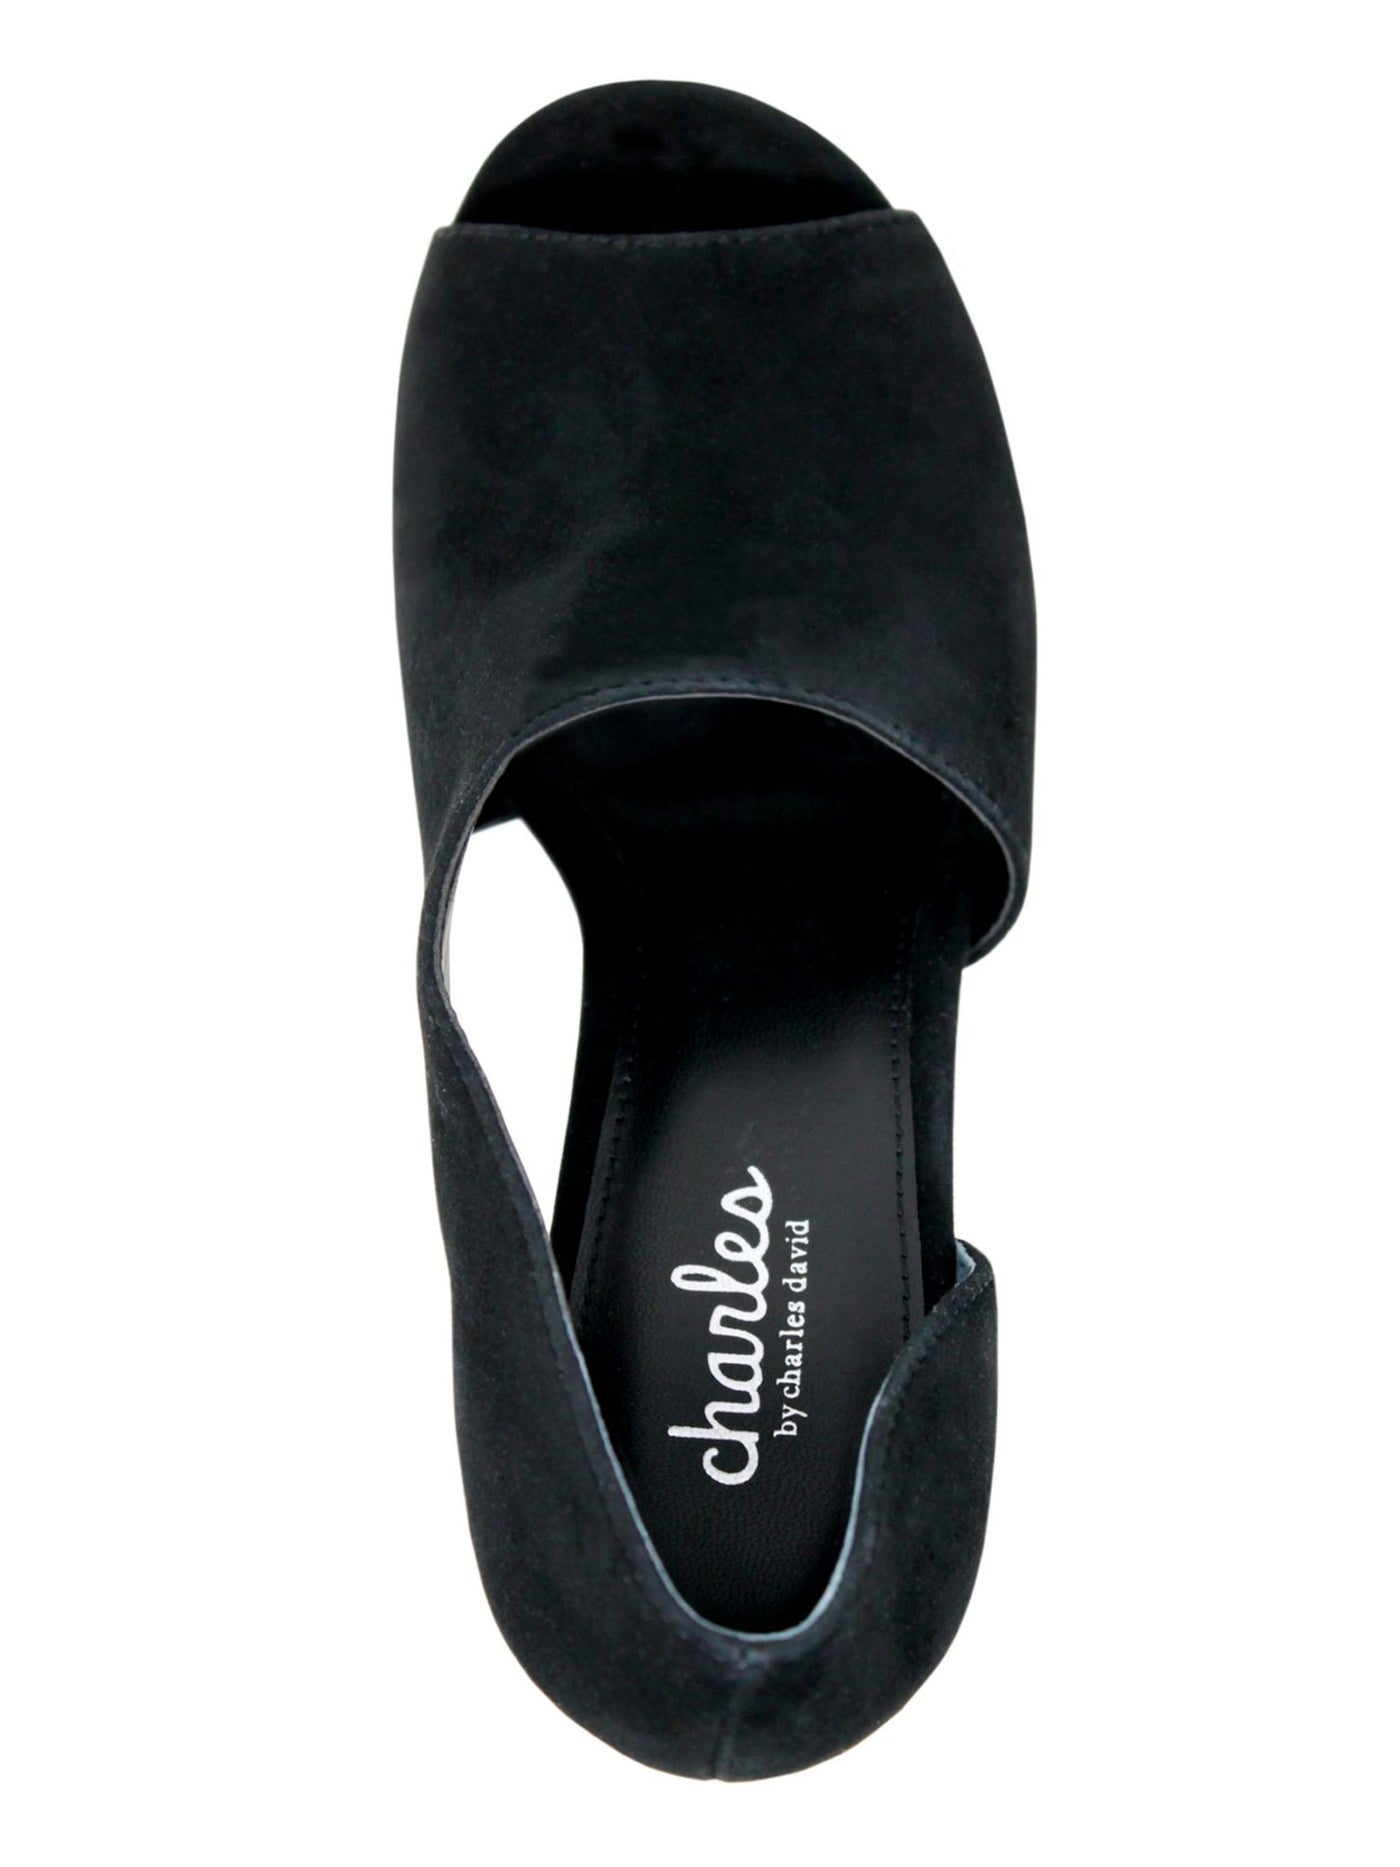 CHARLES BY CHARLES DAVID Womens Black Dorsay Padded Raile Round Toe Stiletto Slip On Dress Sandals Shoes 5 M